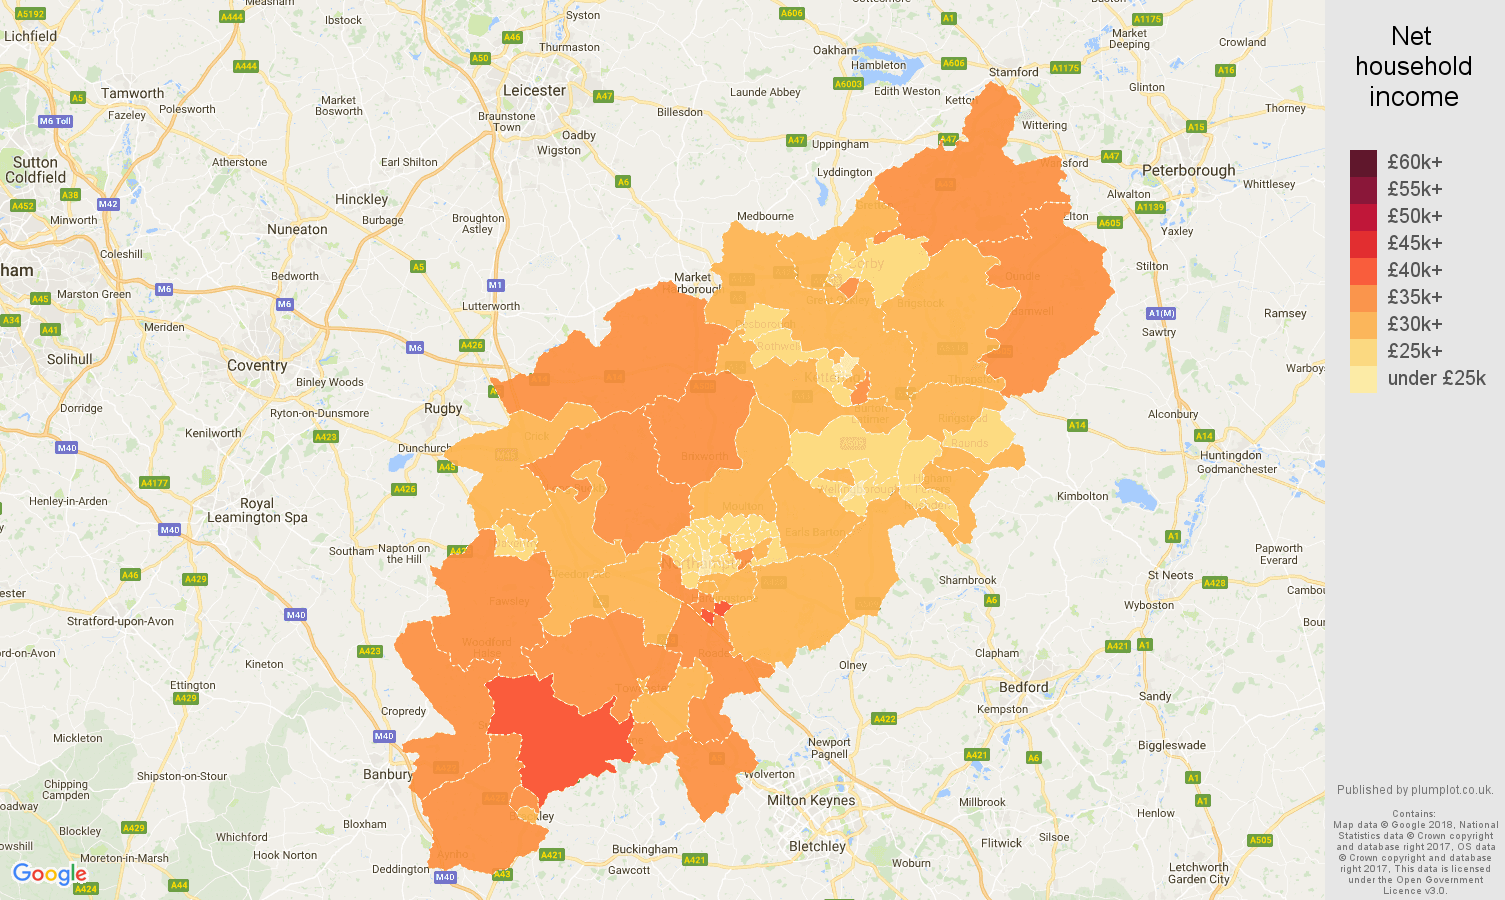 Northamptonshire net household income map